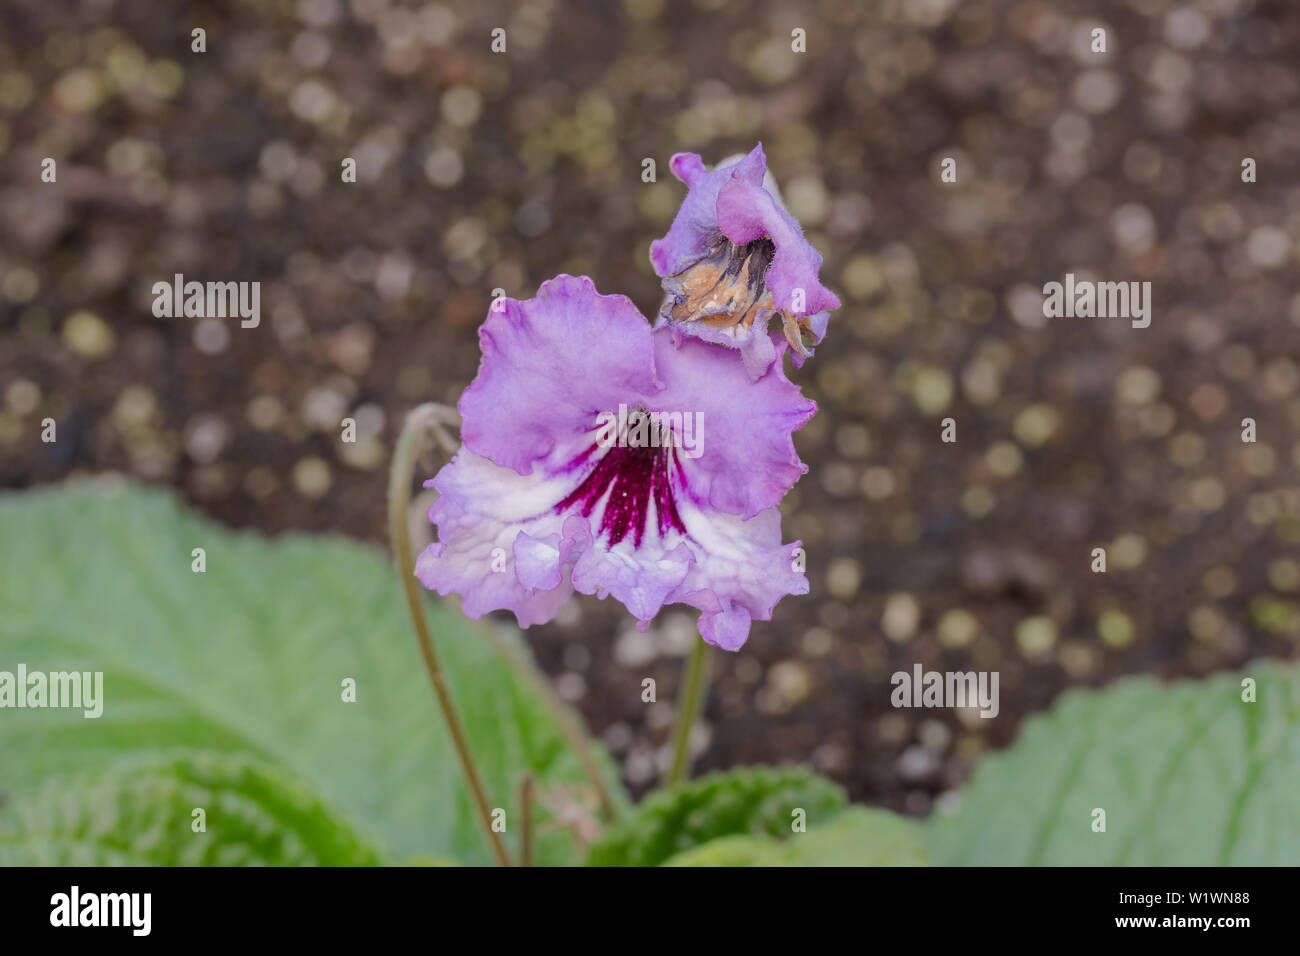 Streptocarpus soft purple flower in flower garden. Stock Photo